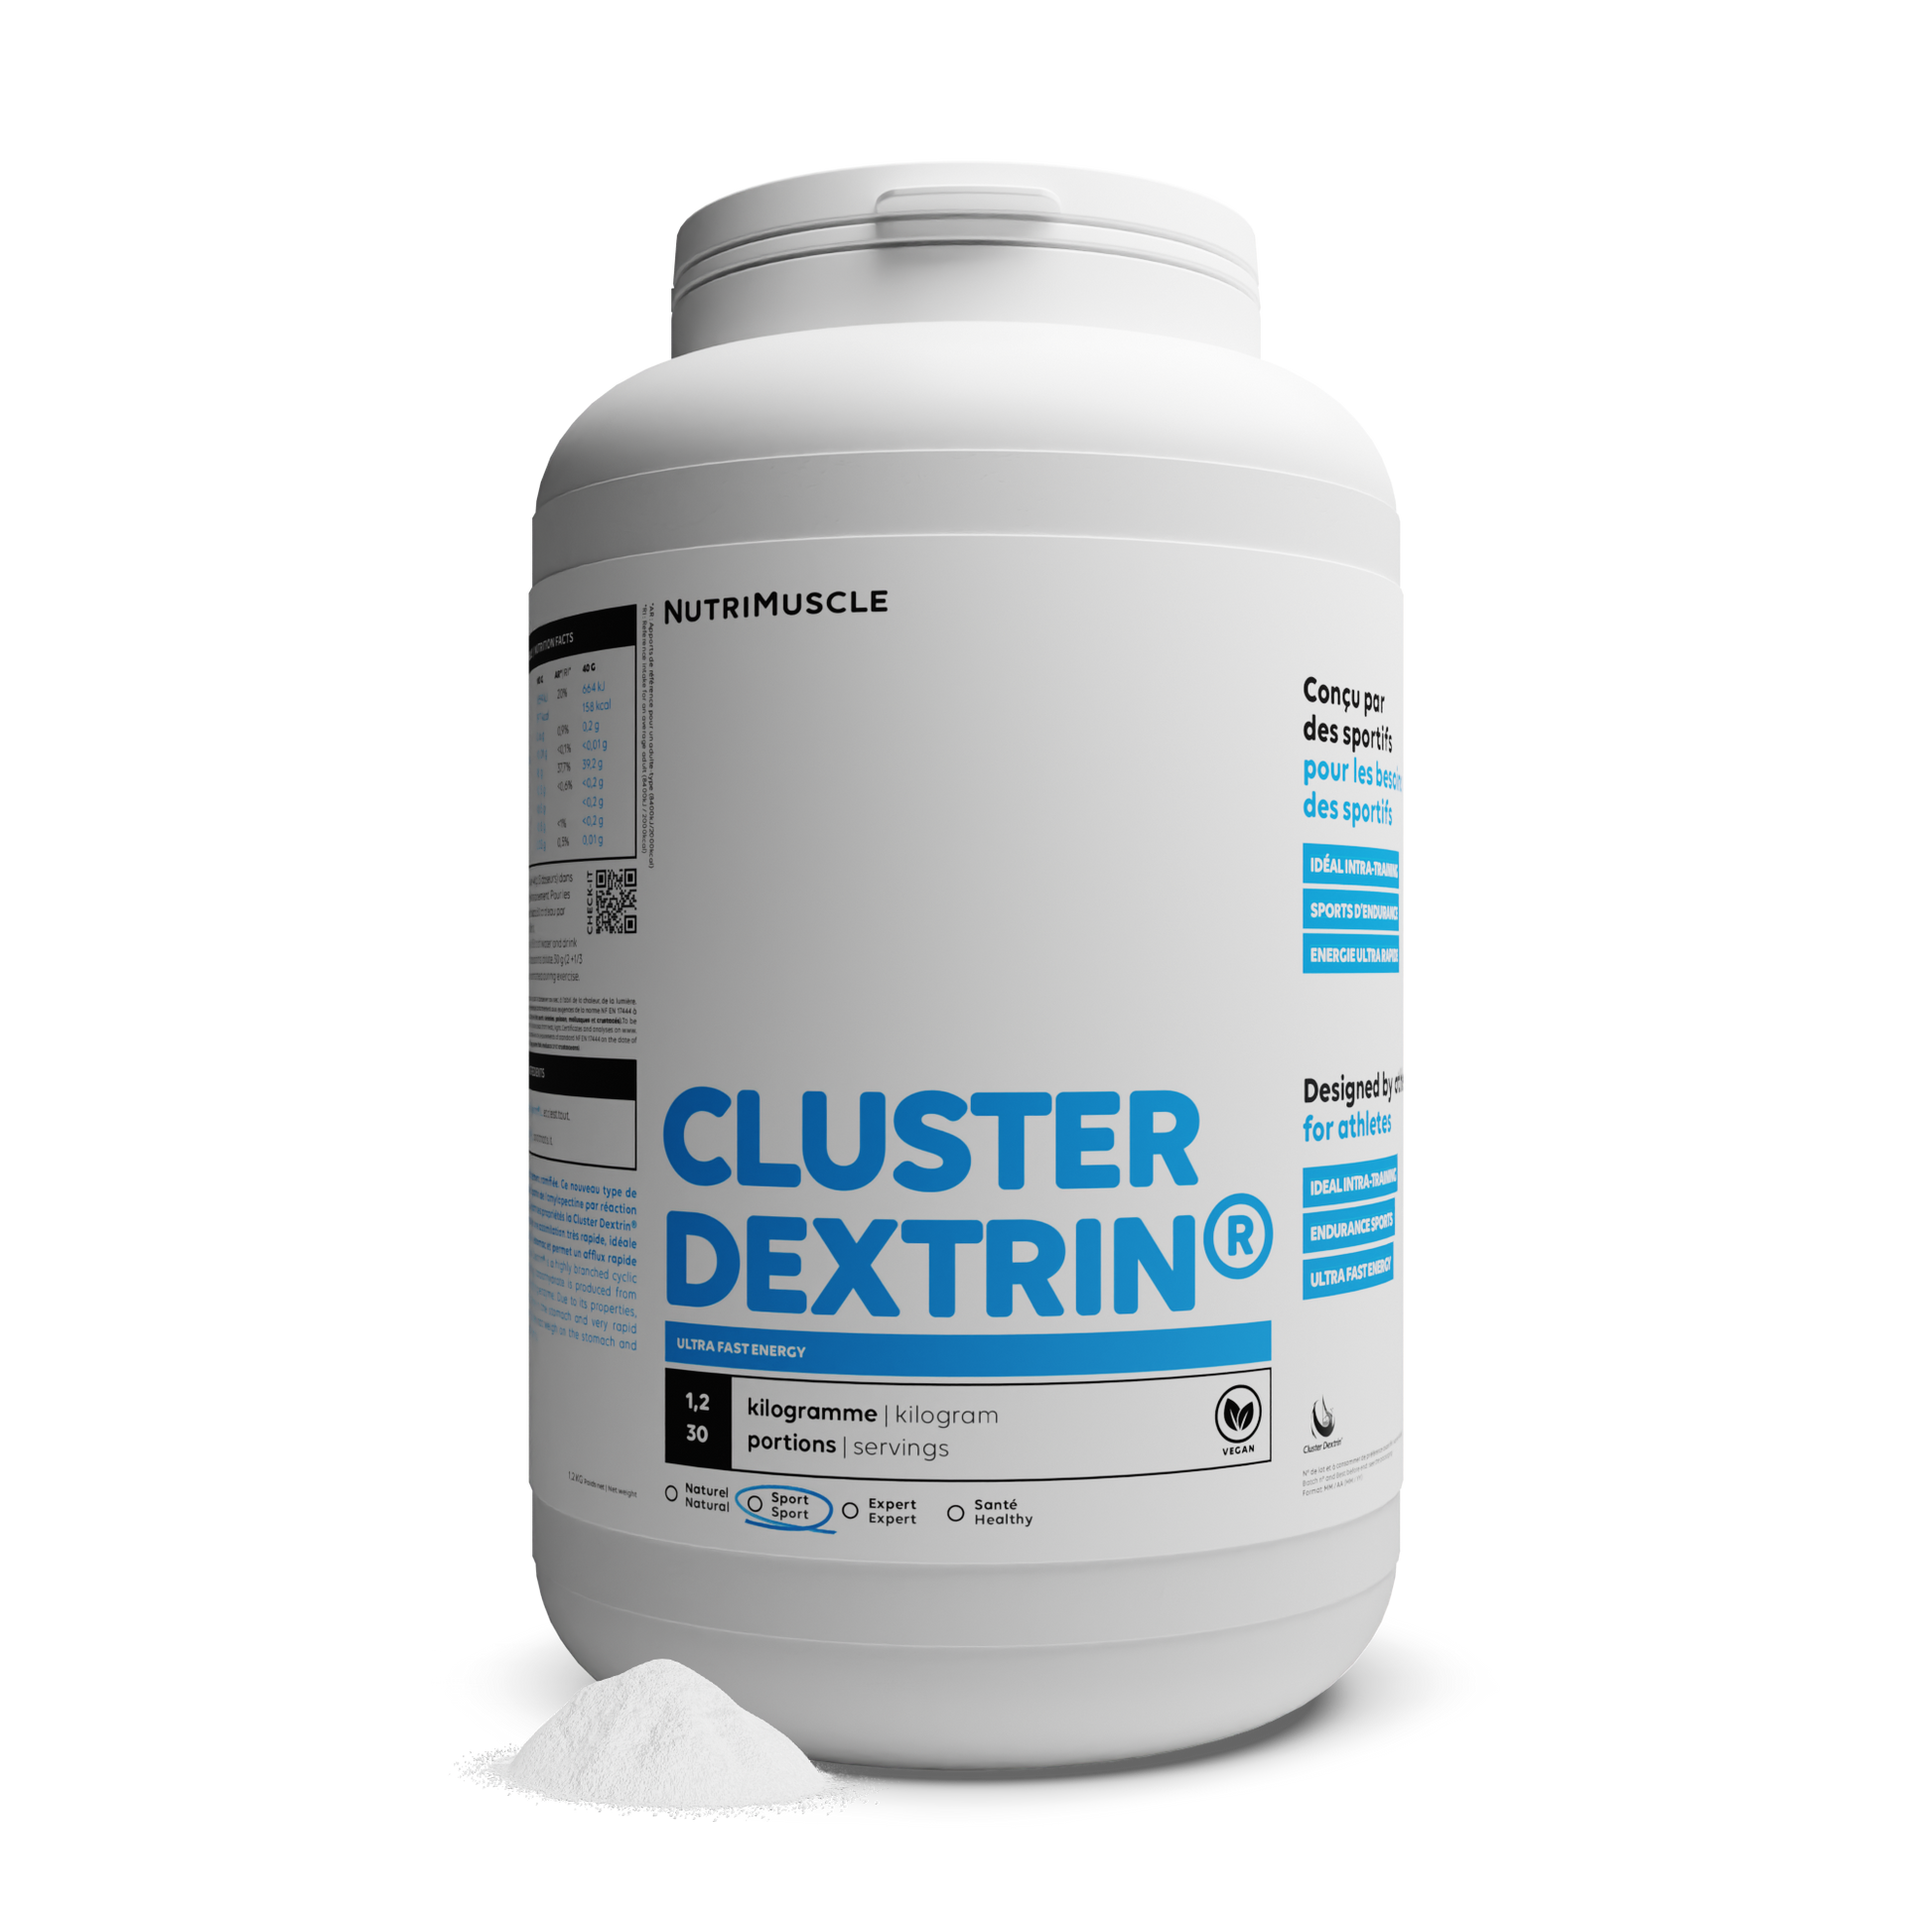 Clúster dextrin®